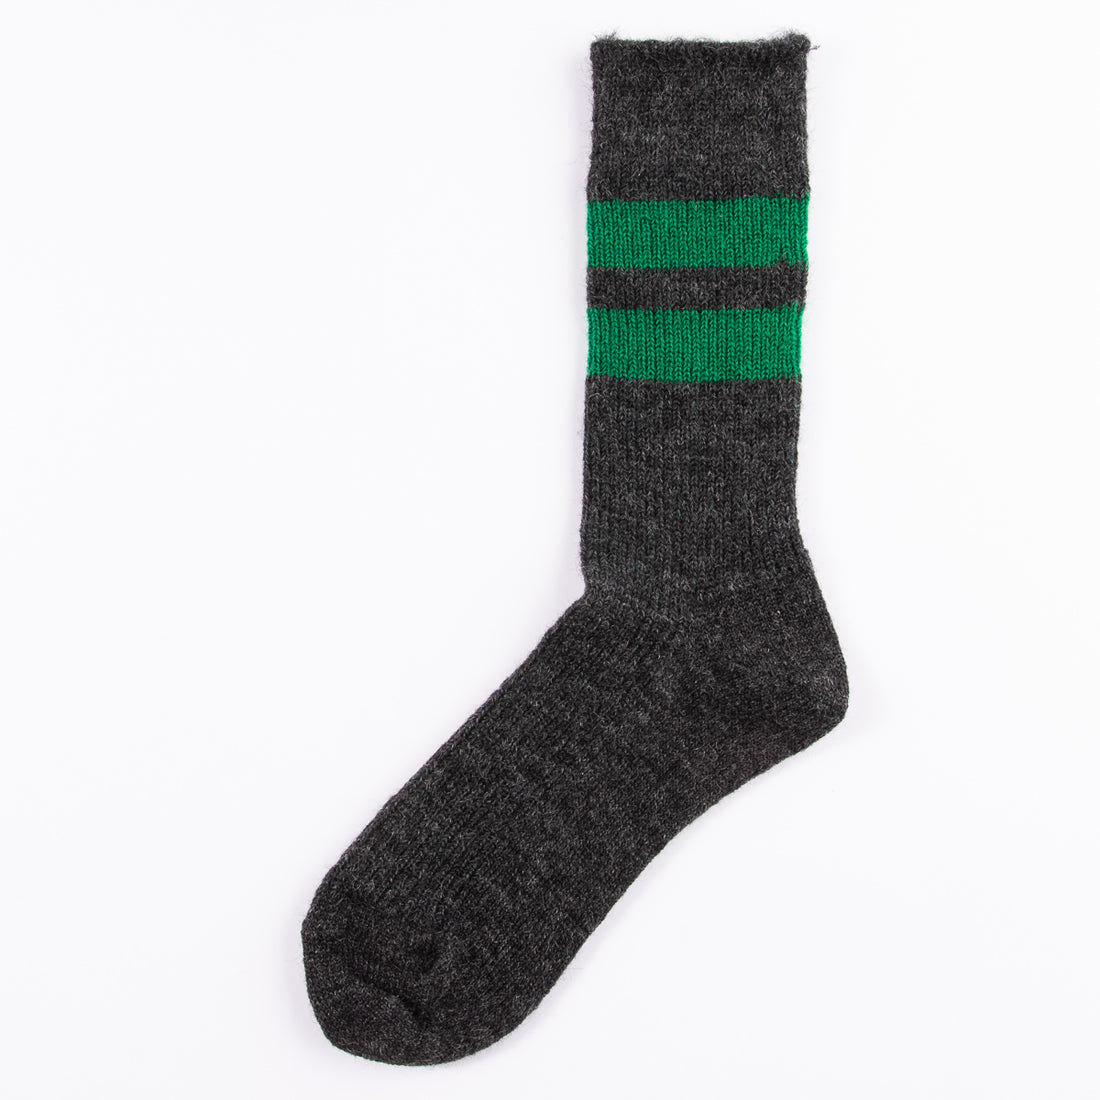 RoToTo Reversible Brushed  Mohair Socks - Charcoal - Standard & Strange